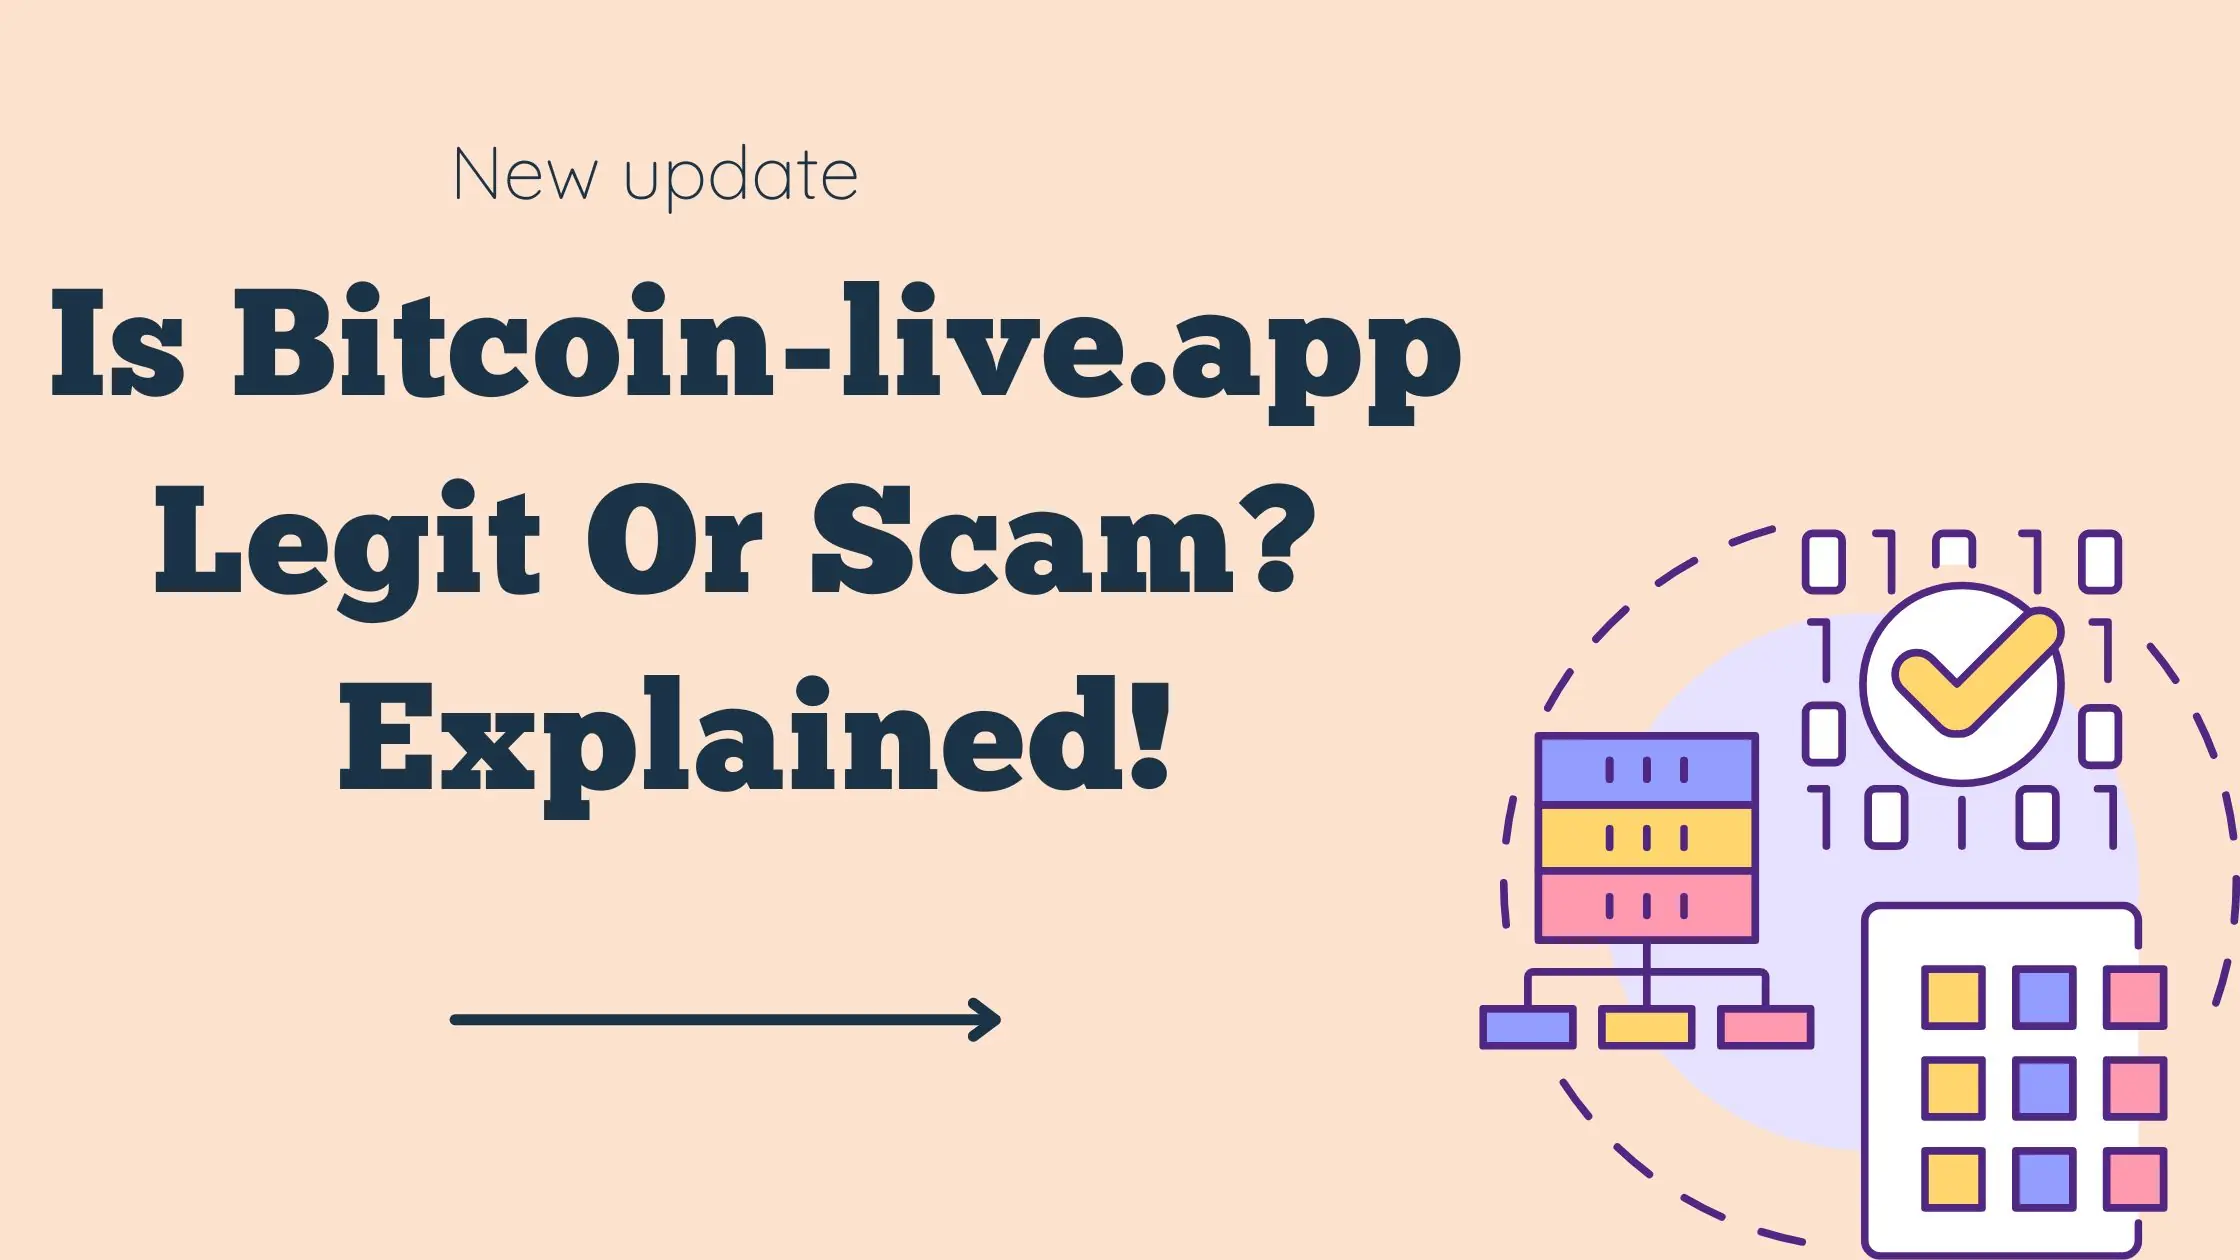 Is bitcoin-live.app legit or scam? 